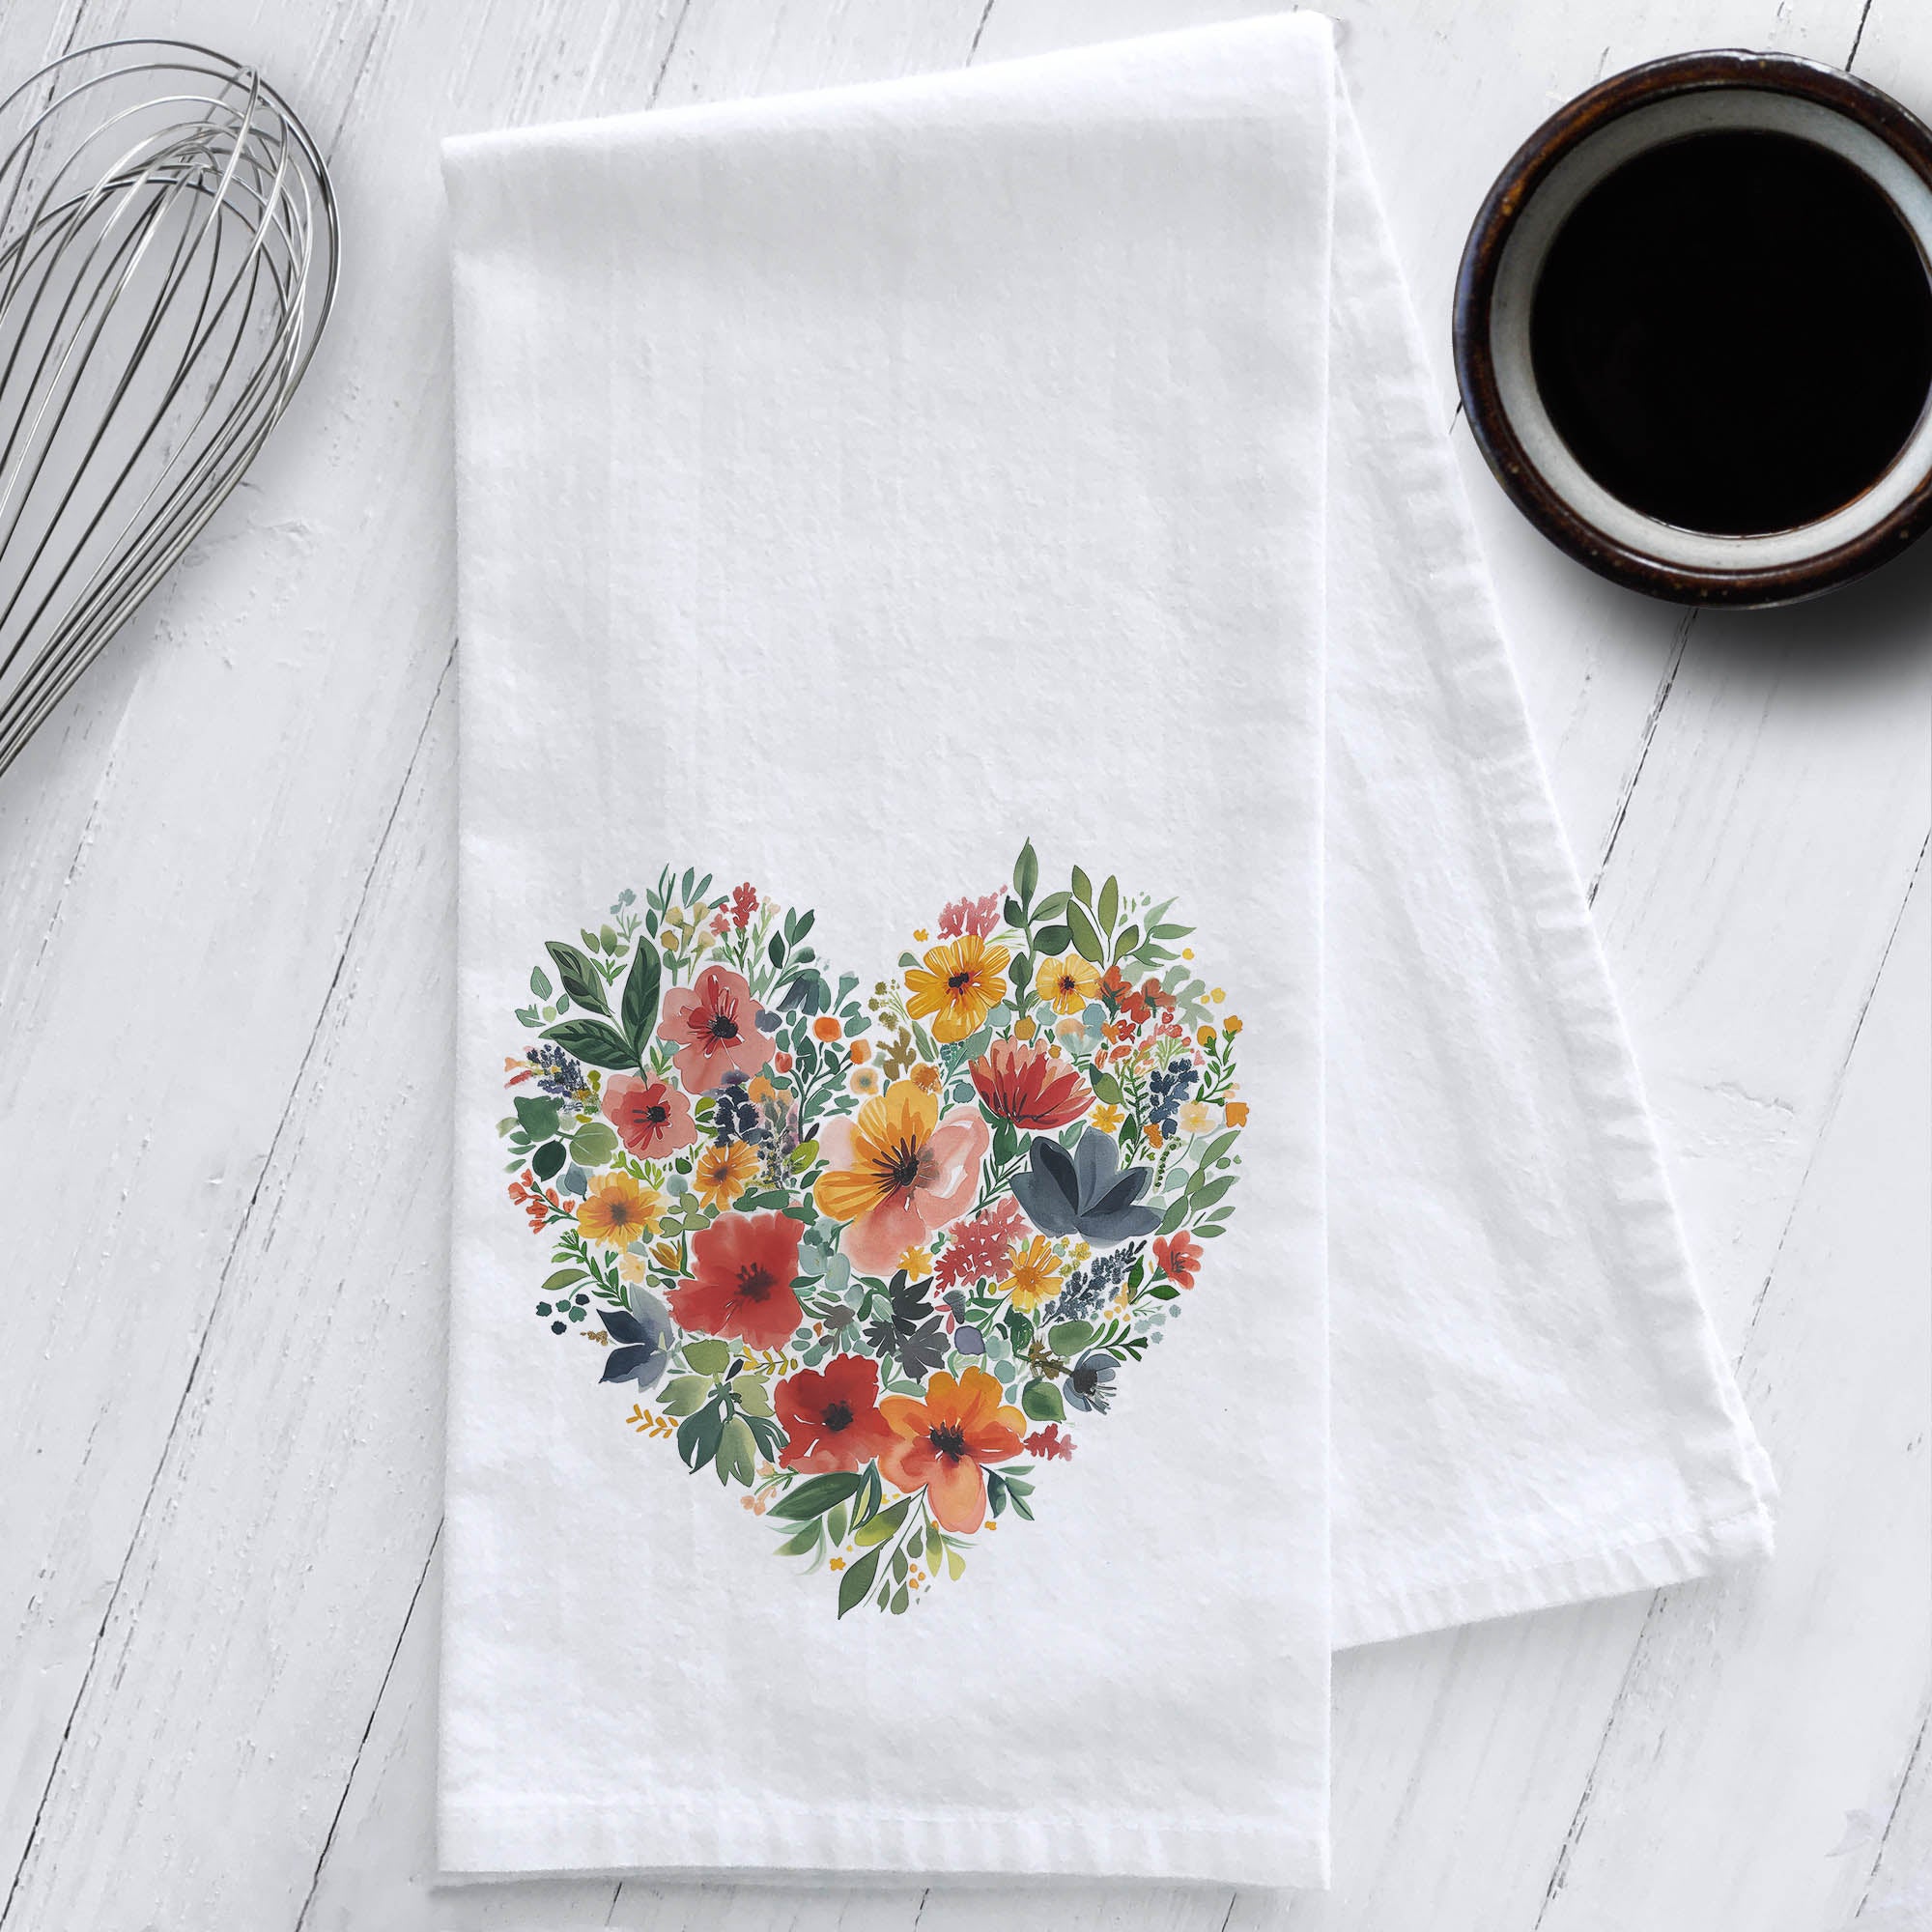 Floral Heart Valentine's Day Tea Towel